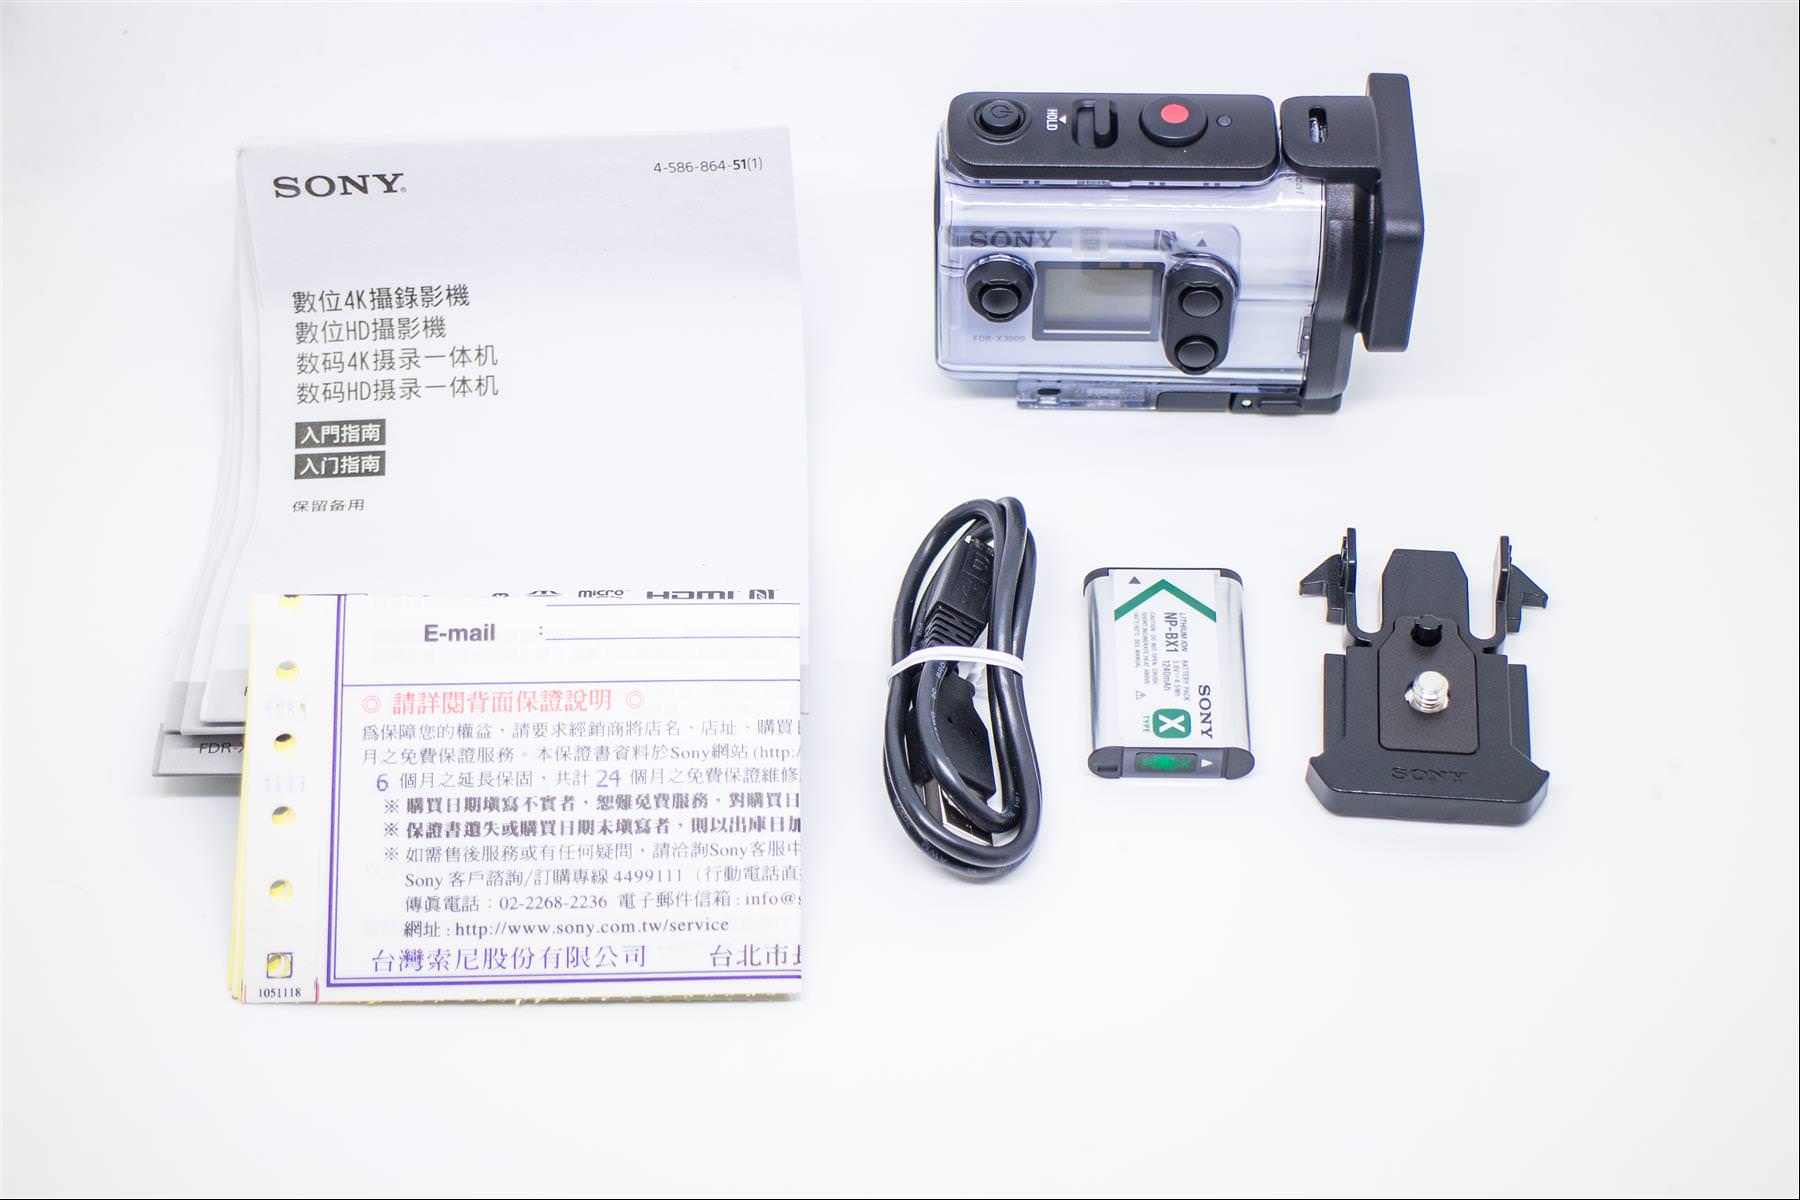 比攝影73] Sony FDR-X3000 - 4K Action Cam 超強防手震4K 運動攝影機 